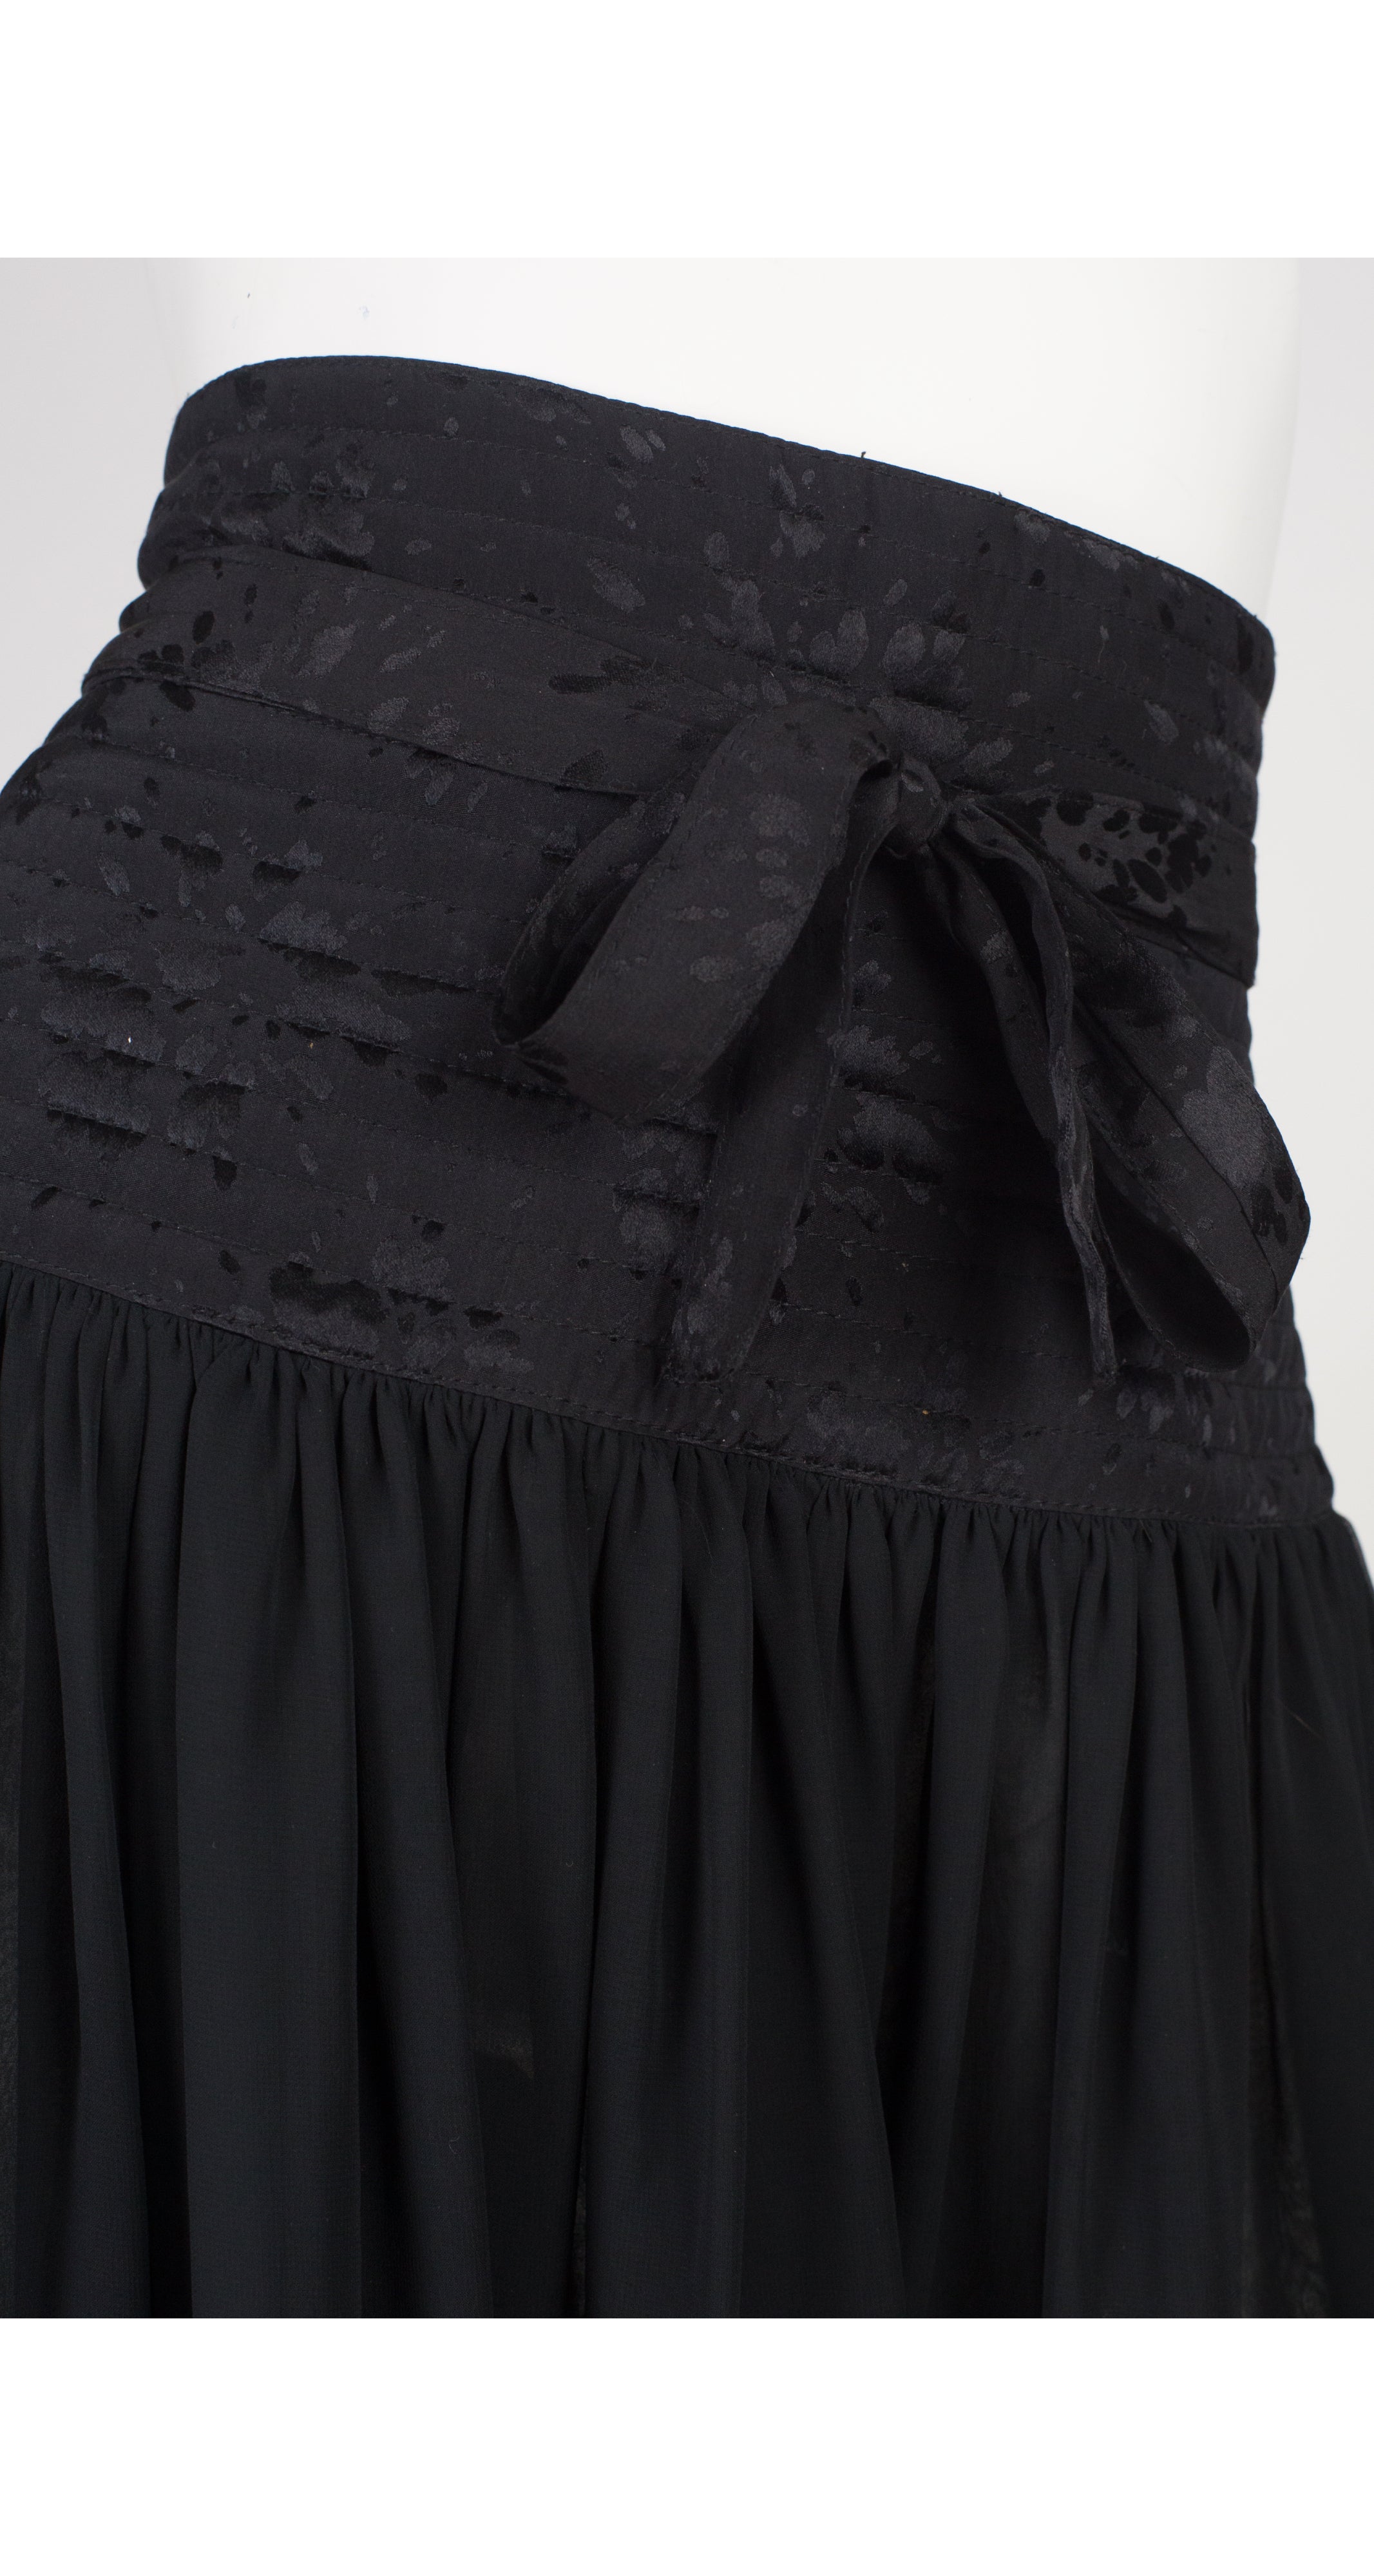 1980s Black Silk & Chiffon High-Waisted Mini Skirt